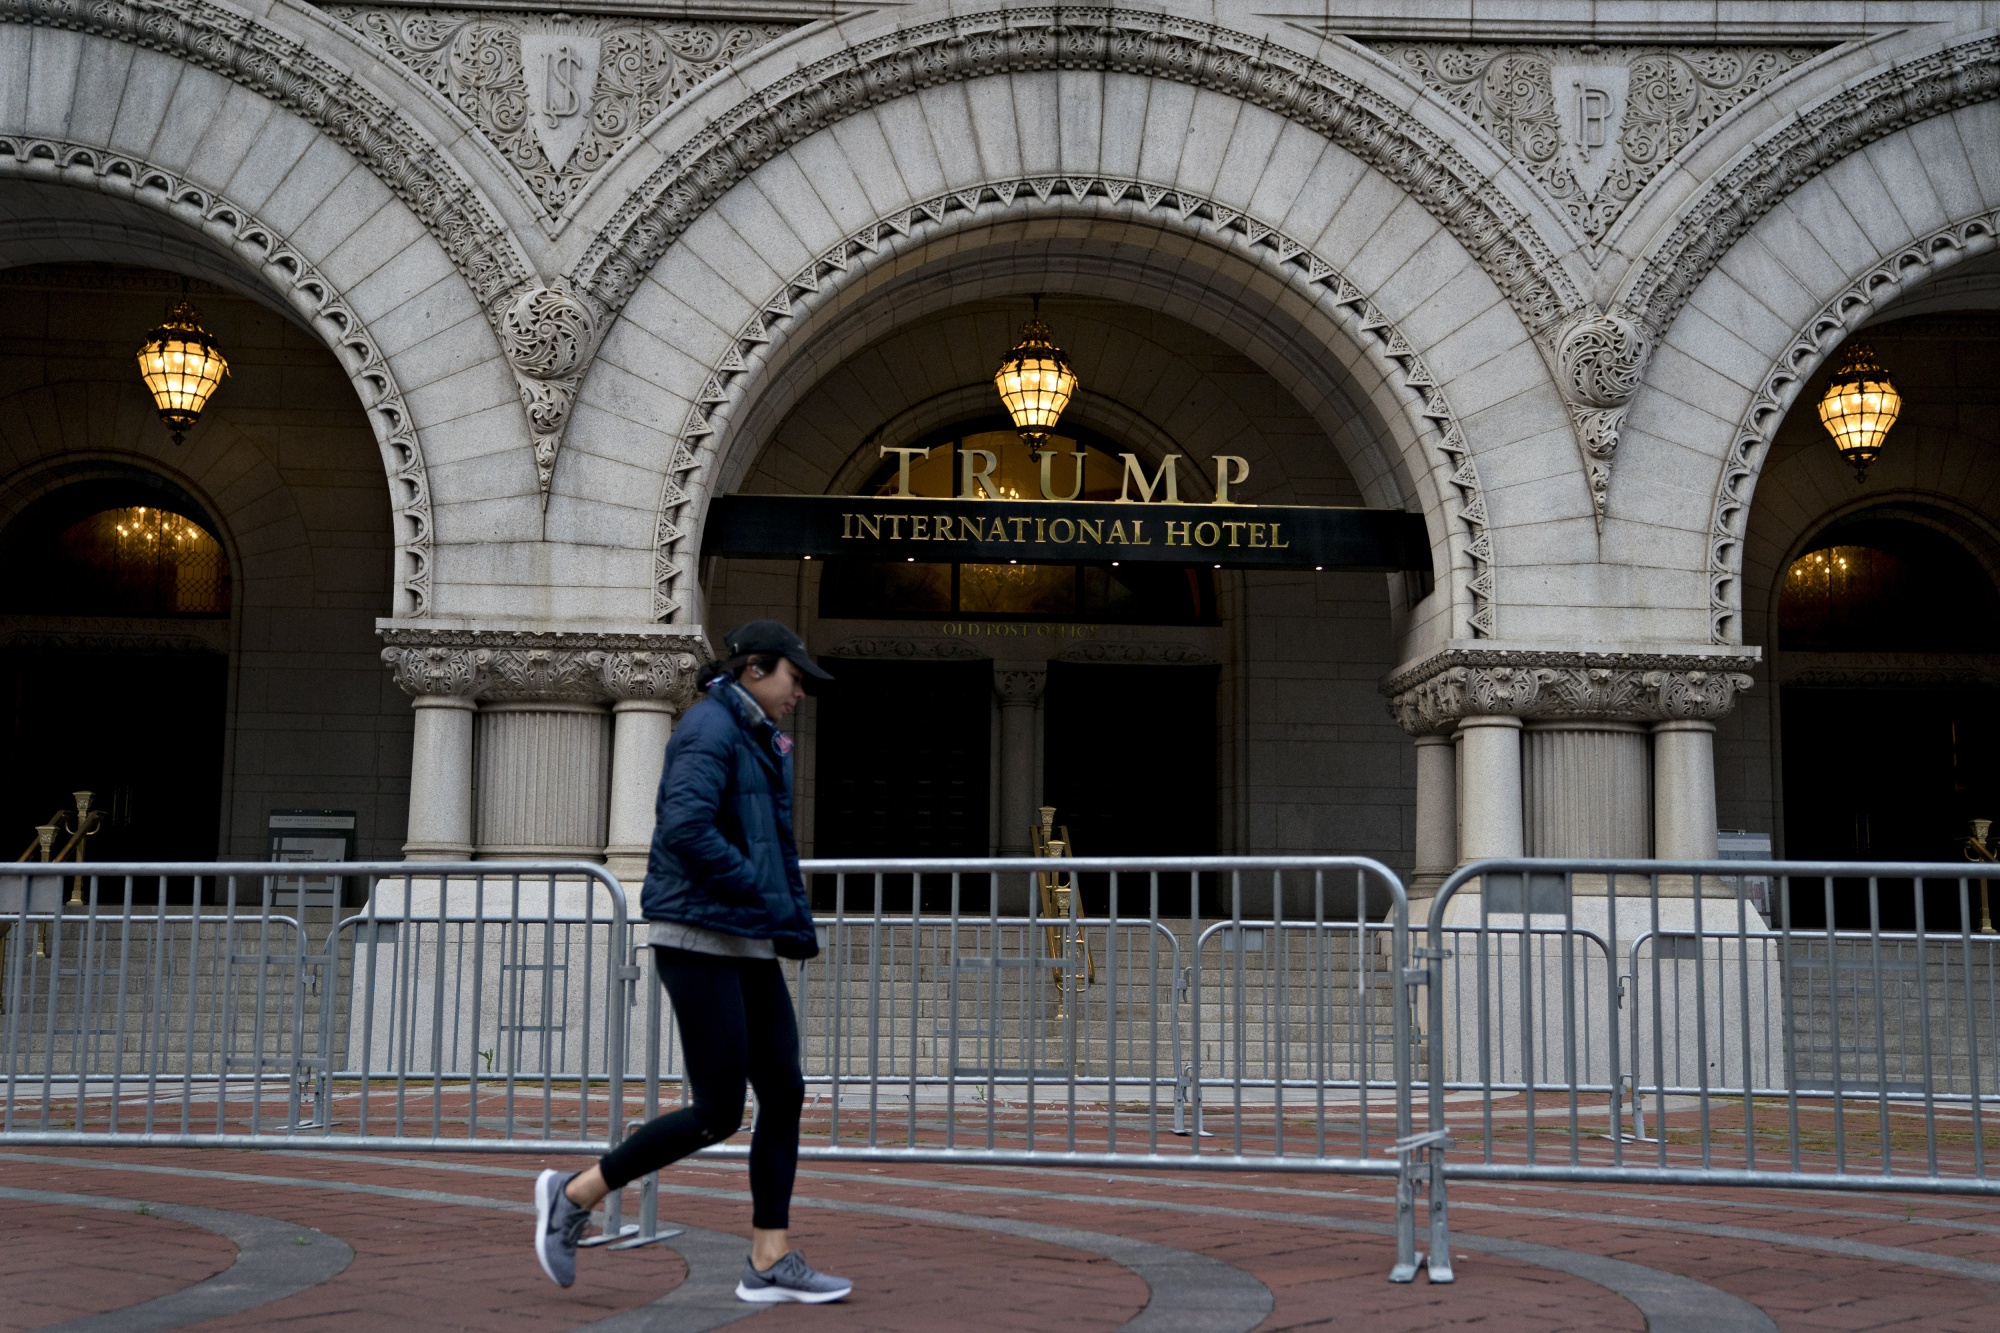 A pedestrian walks past the Trump International Hotel in Washington, D.C.